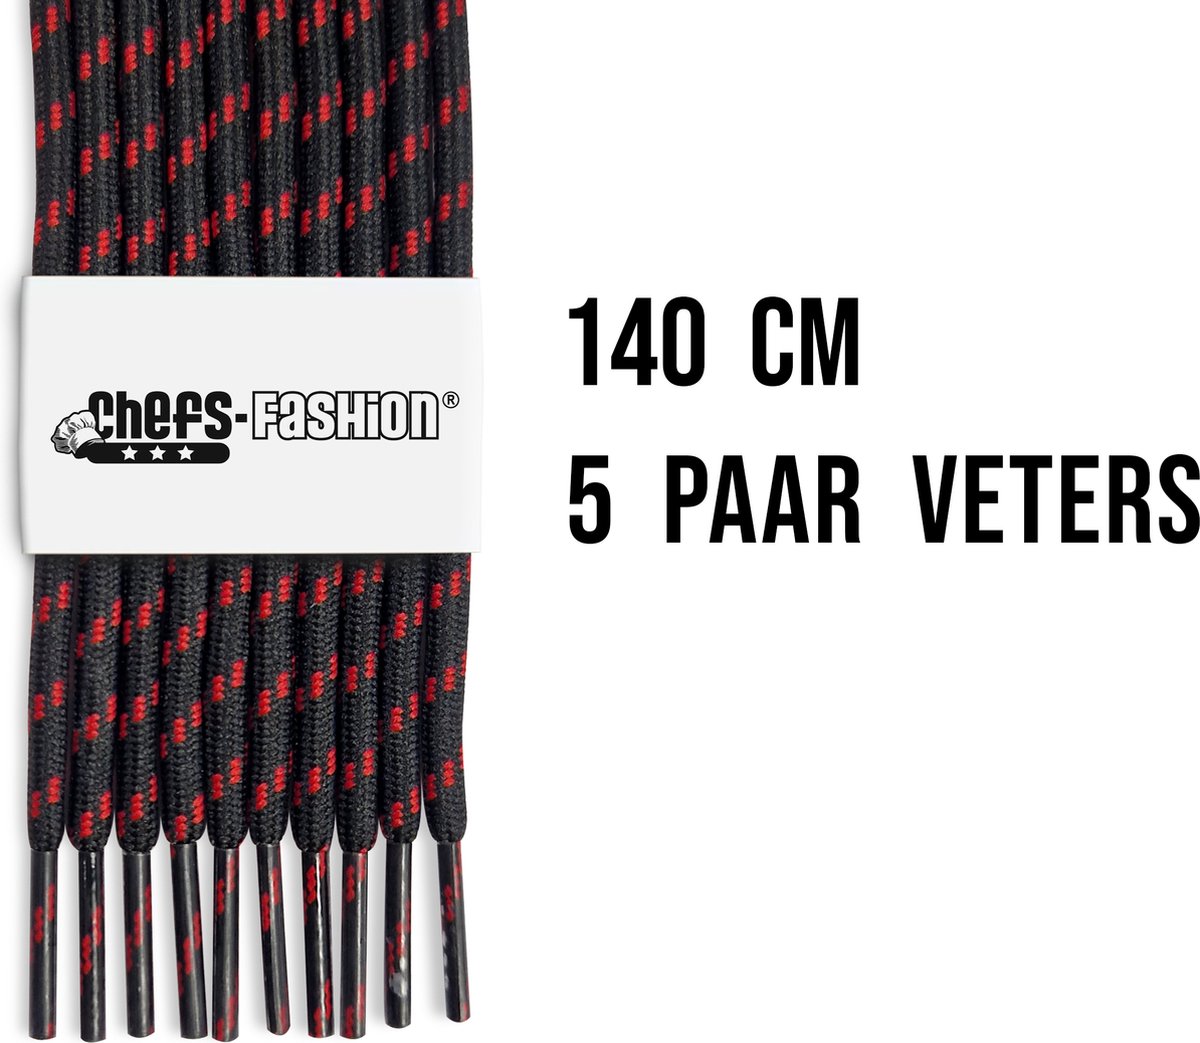 Chefs Fashion - Werk/Wandelschoen - Veters - Zwart/Rood - 140cm lang - 4mm dik - 5 paar